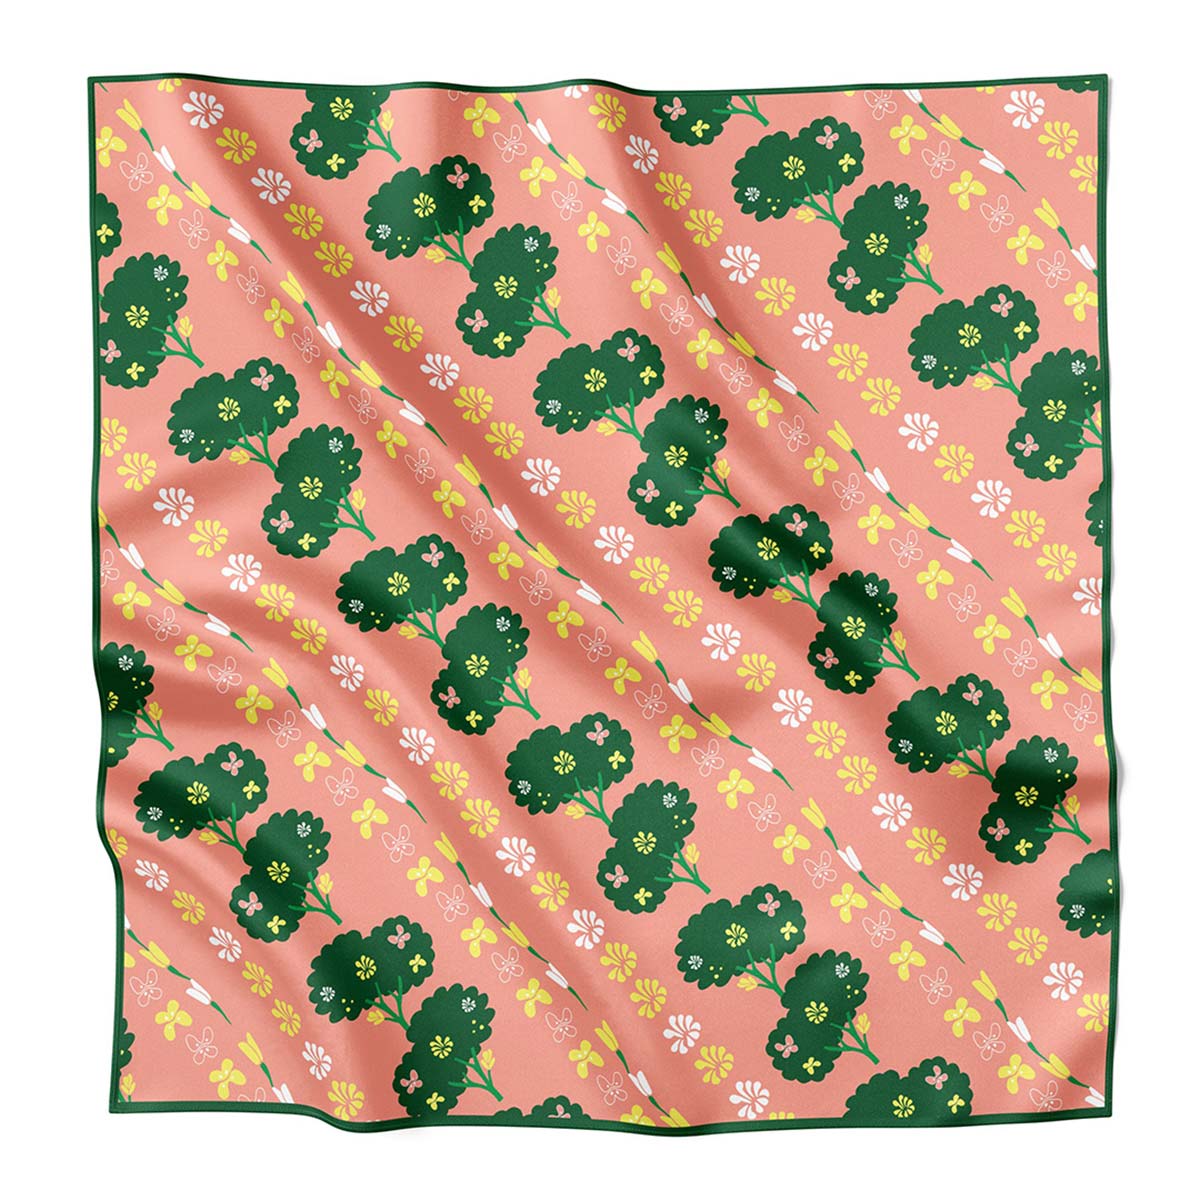 Broccolini on pink silk bandana.